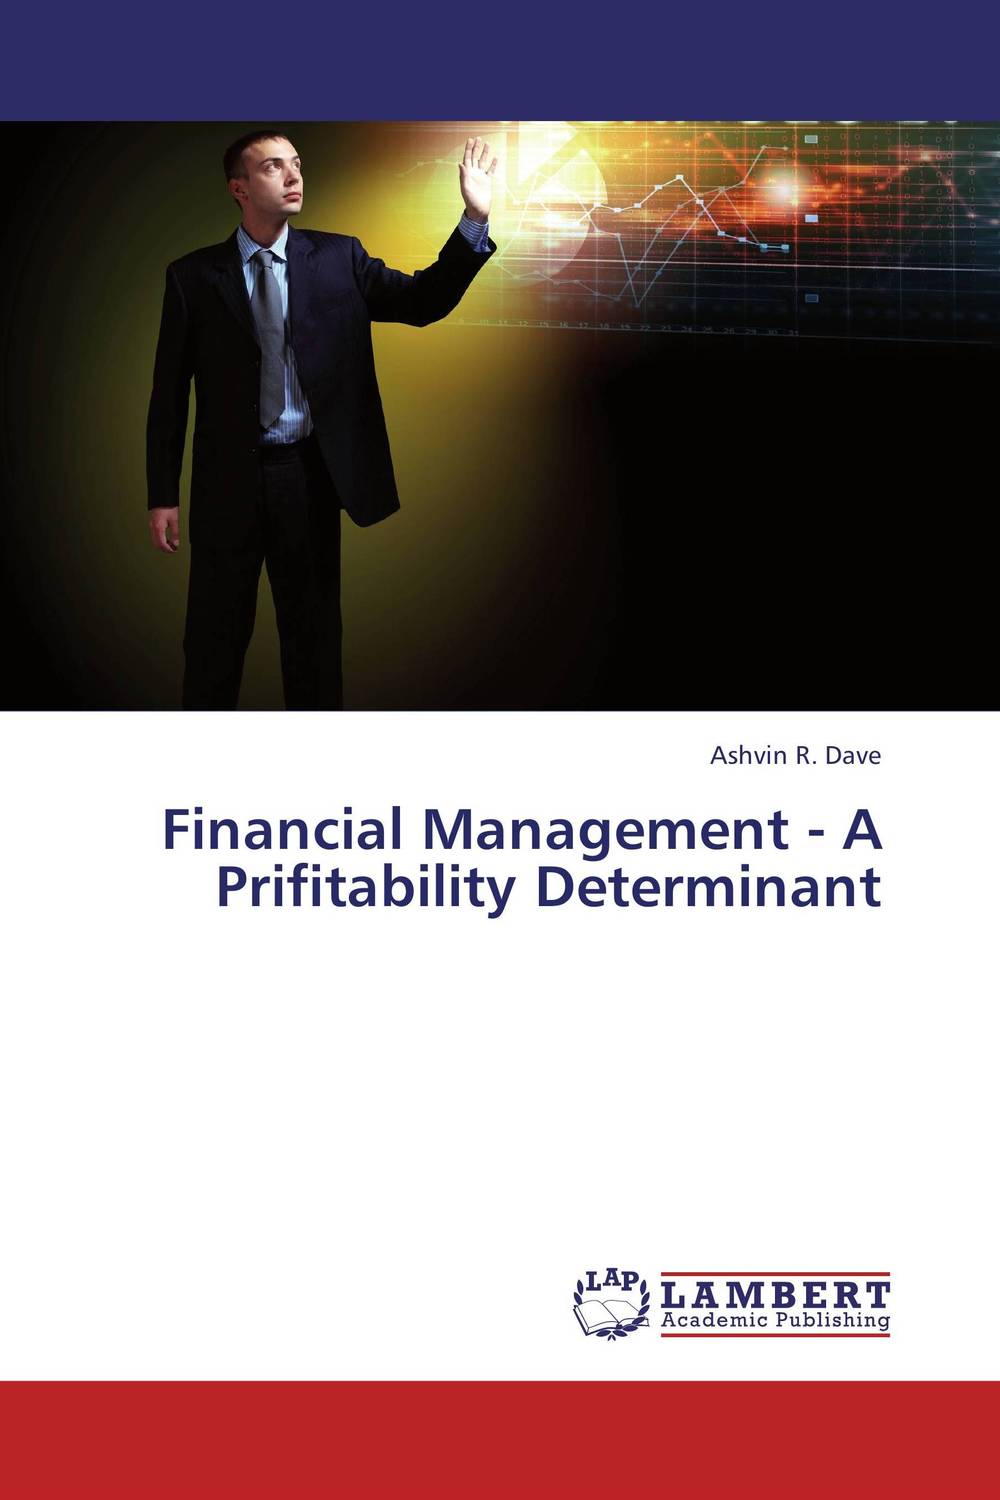 Financial Management - A Prifitability Determinant